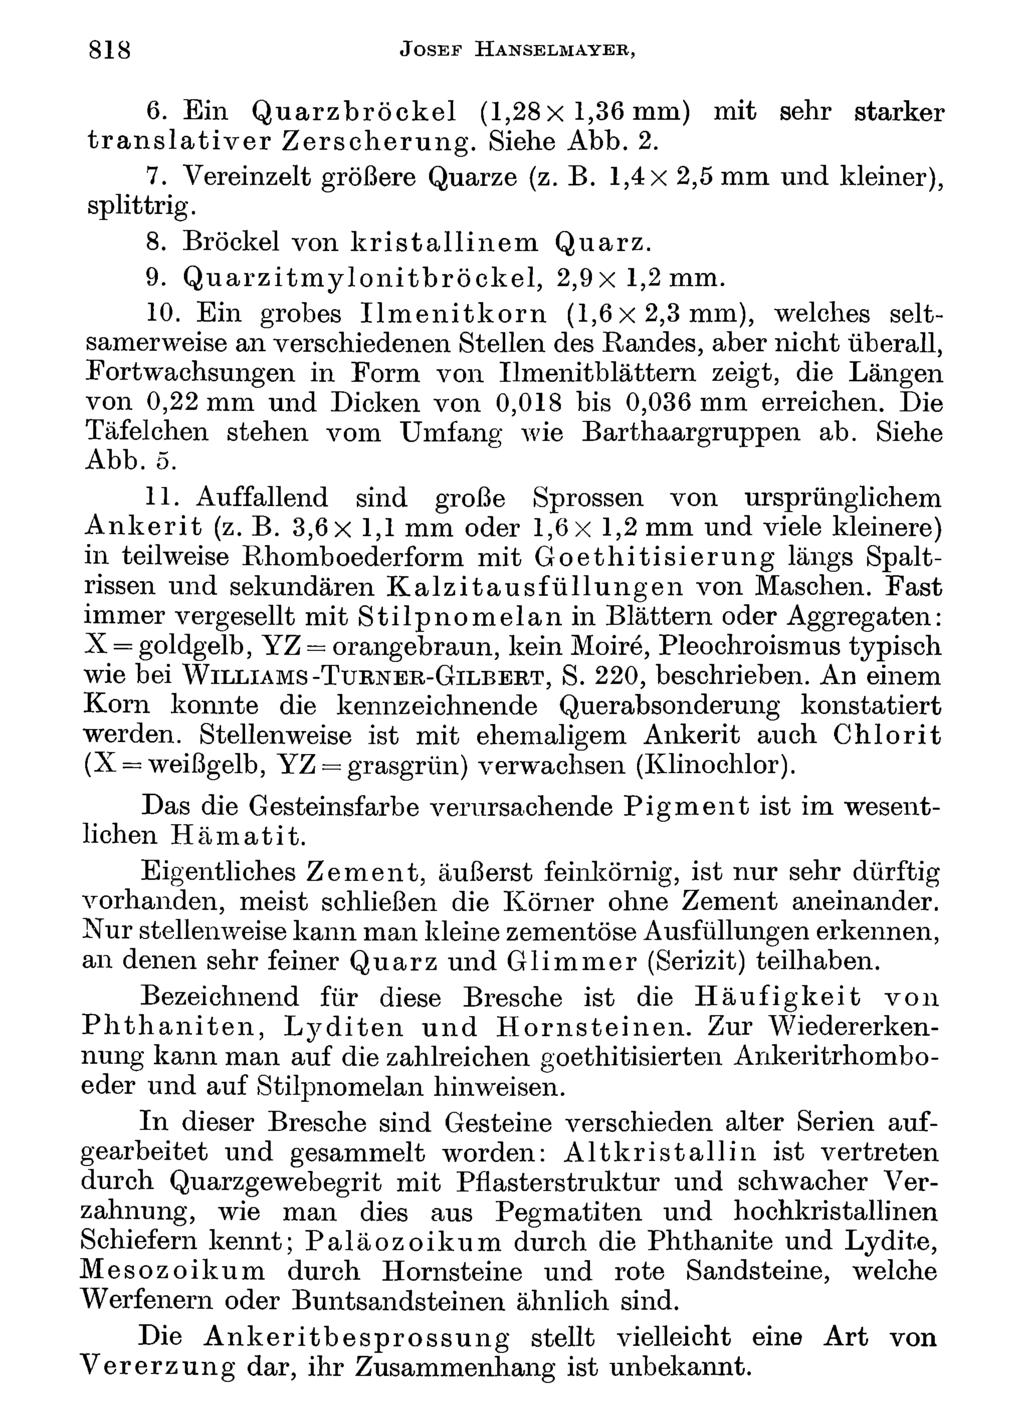 818 J o s e f H a n s e l m a y e r, Akademie d. Wissenschaften Wien; download unter www.biologiezentrum.at 6.